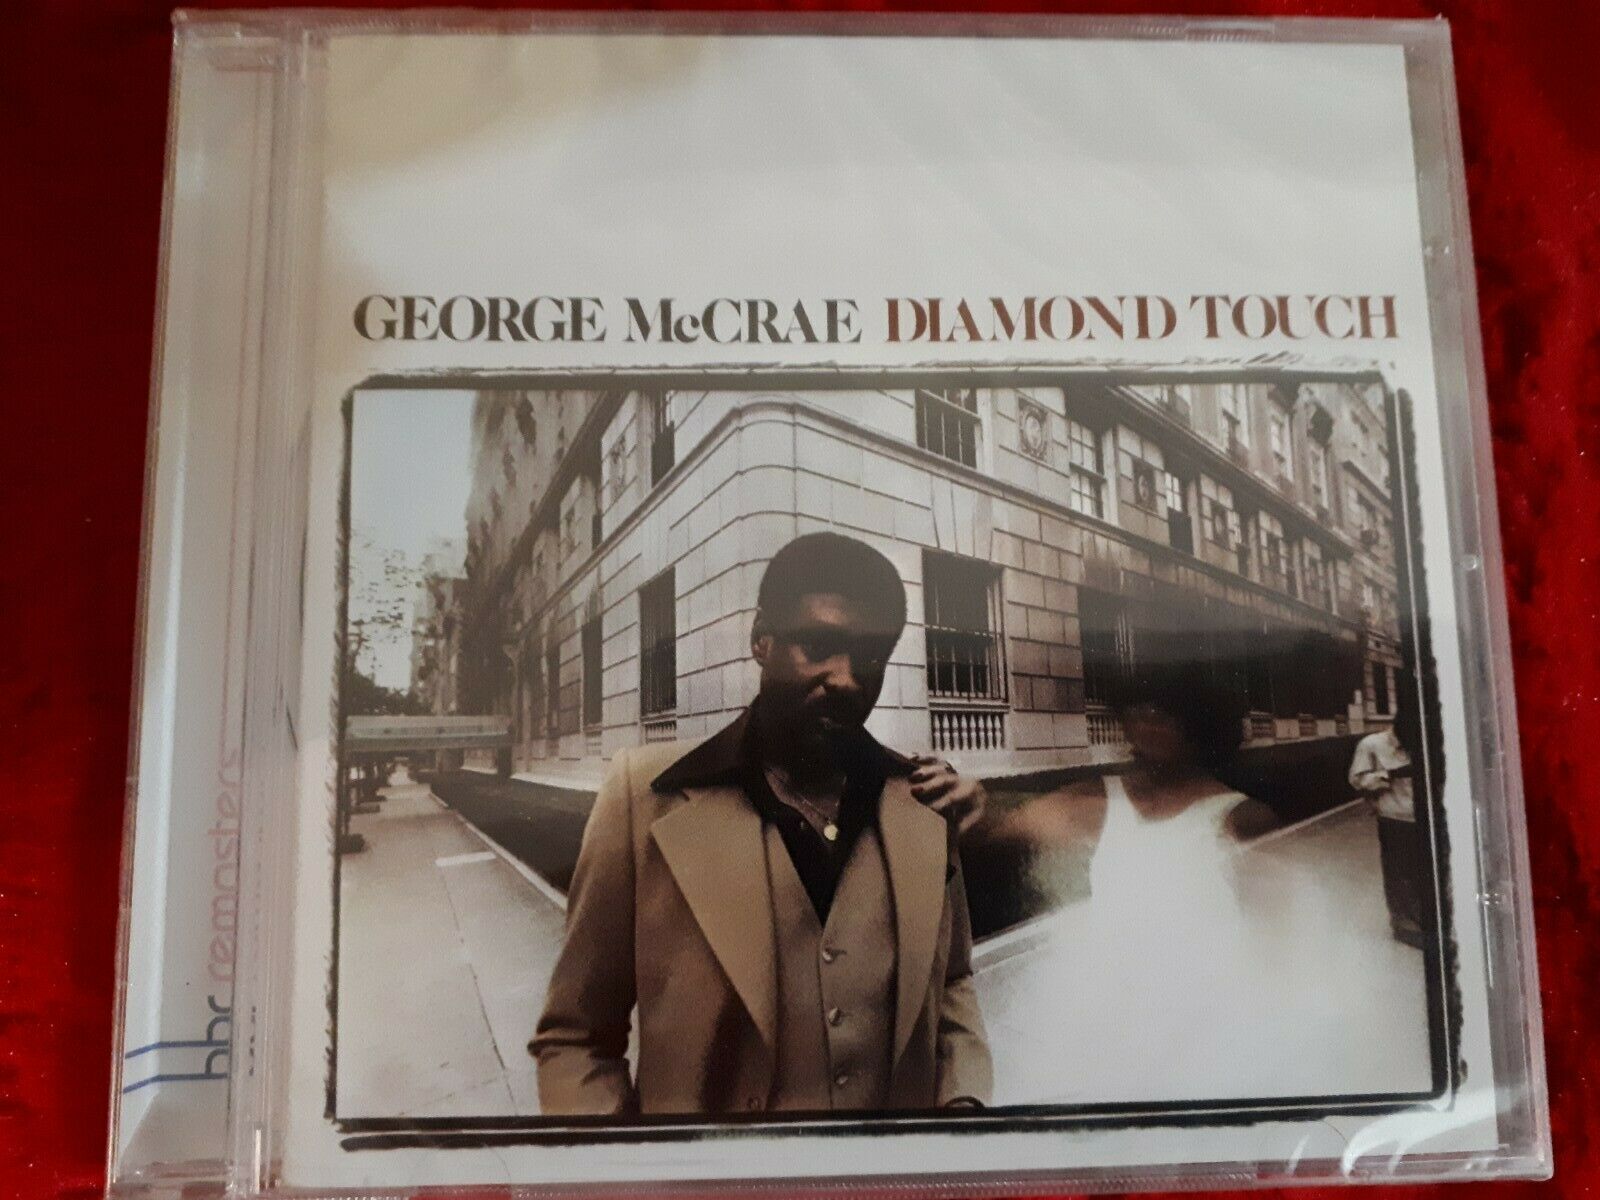 George McCrae - Diamond Touch